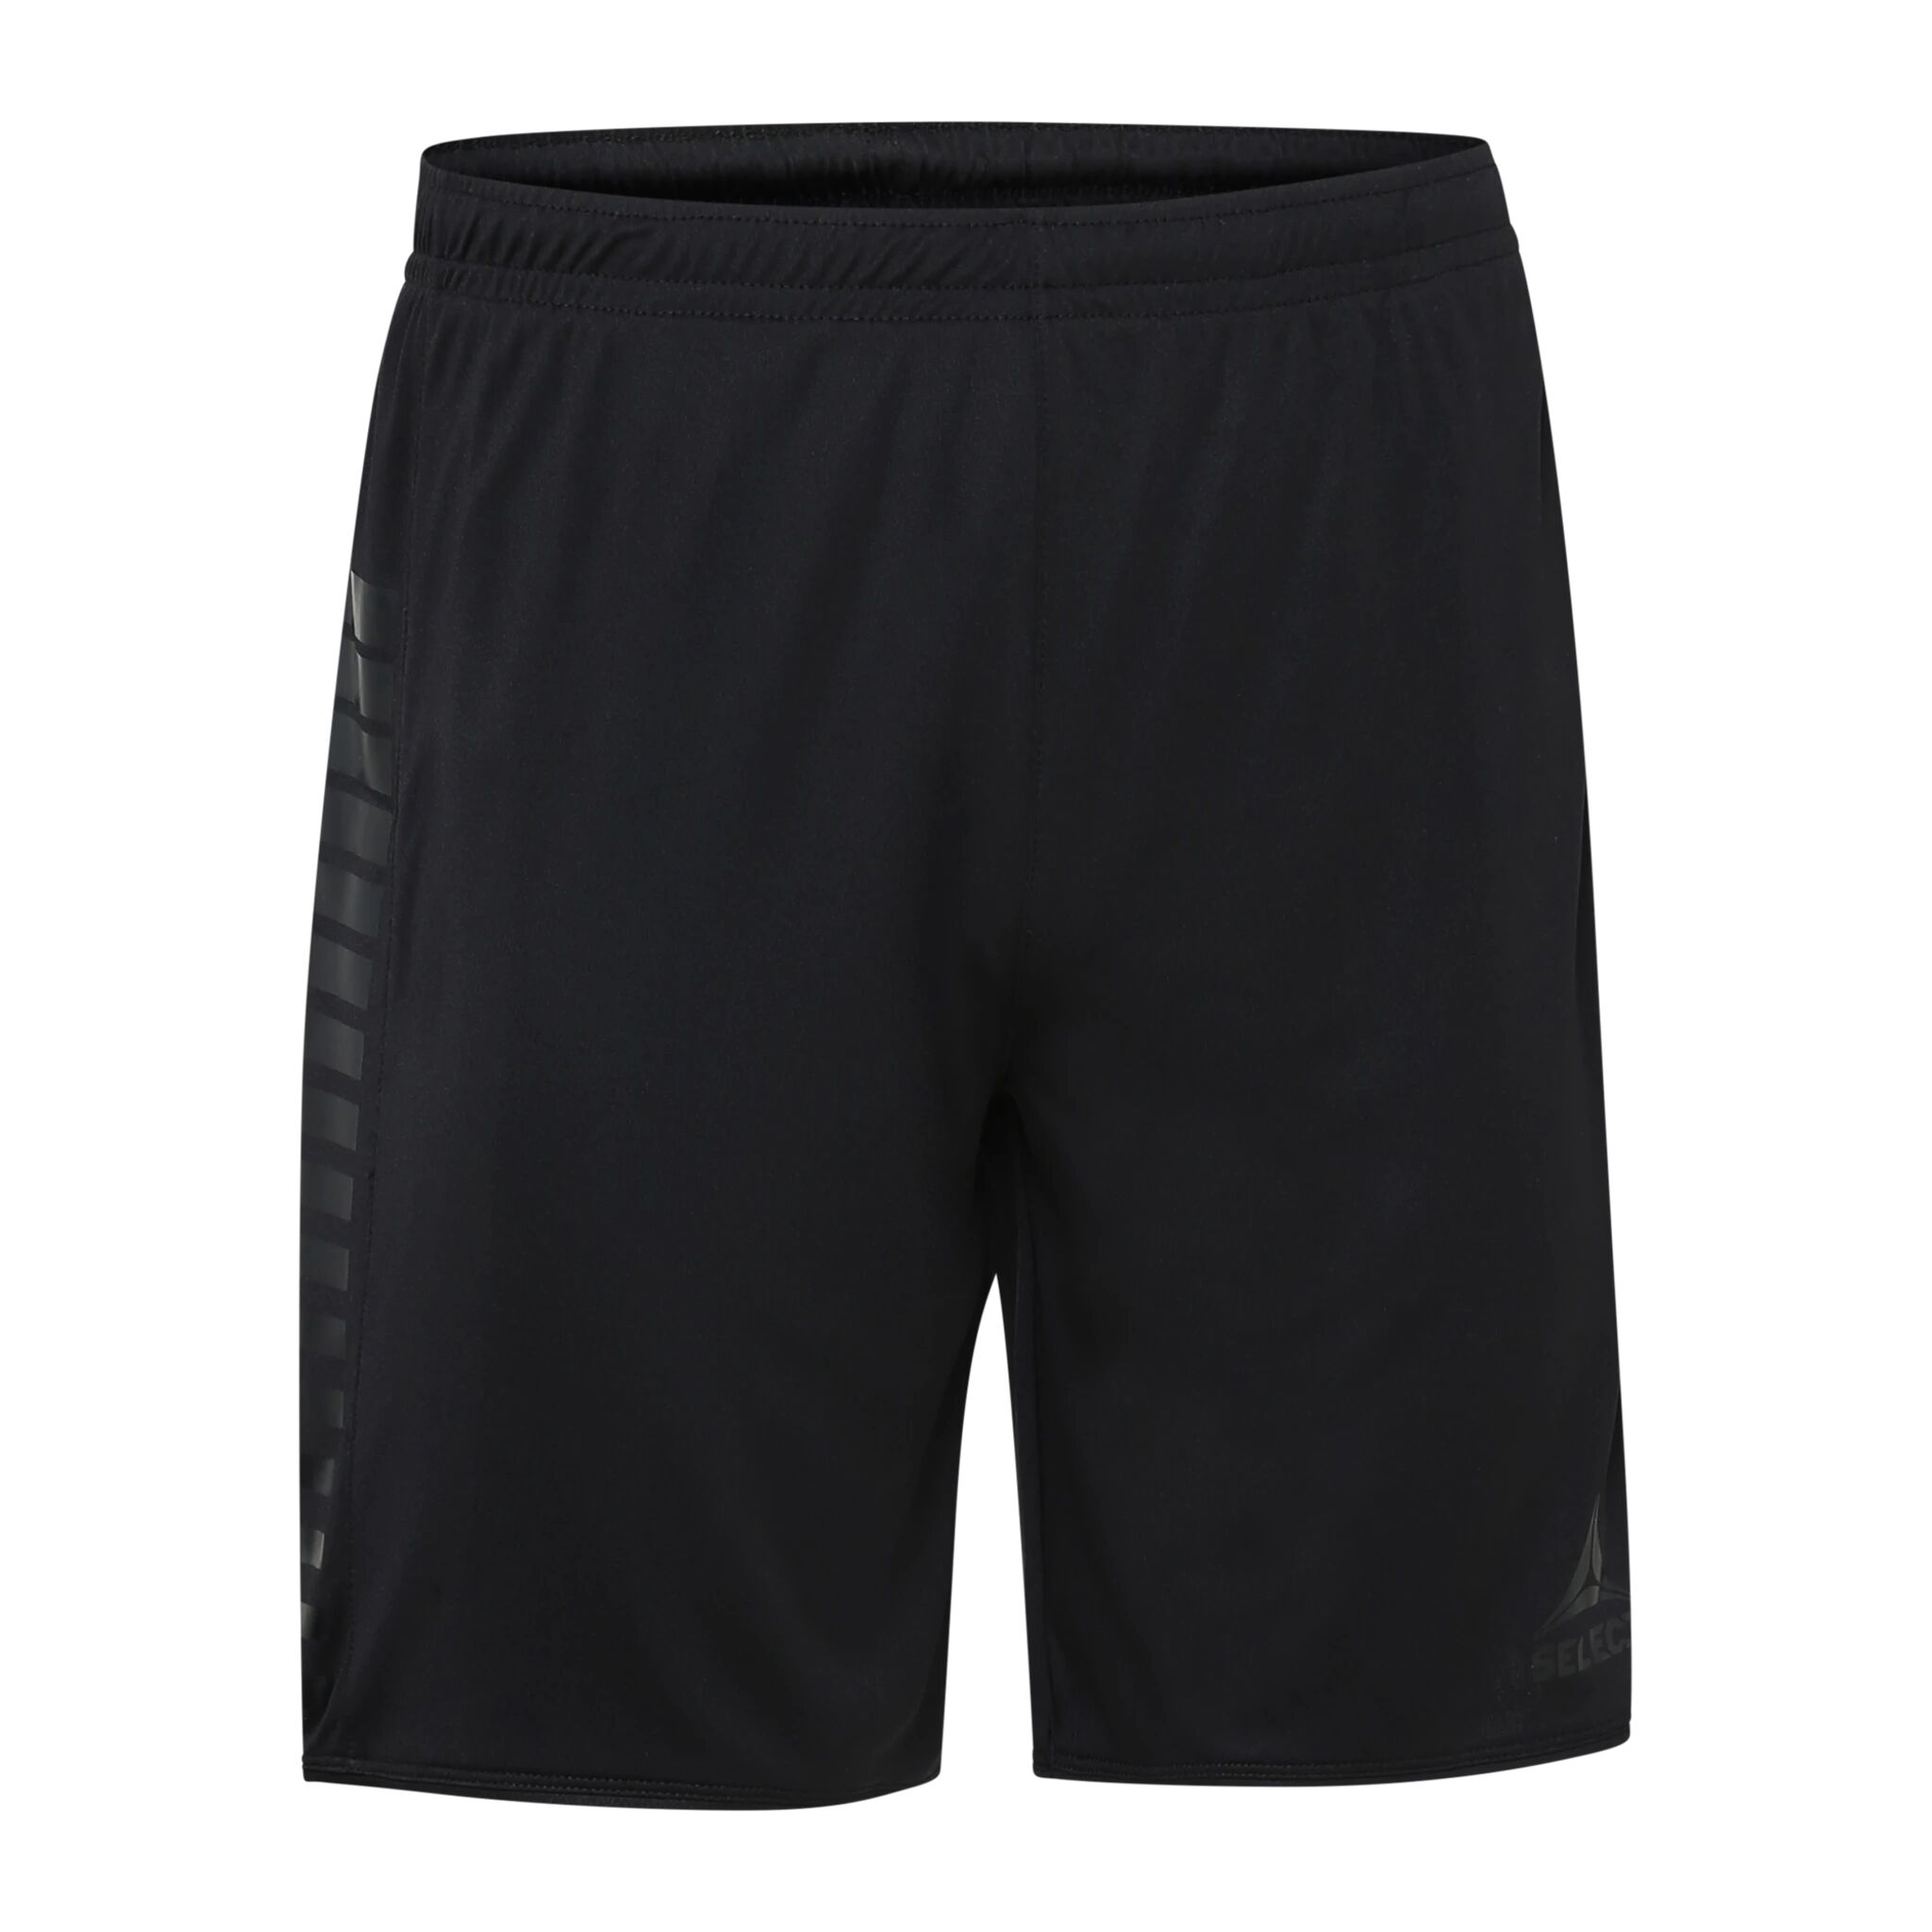 Select Player shorts Argentina, shorts Junior/Senior 128 BLACK/BLACK